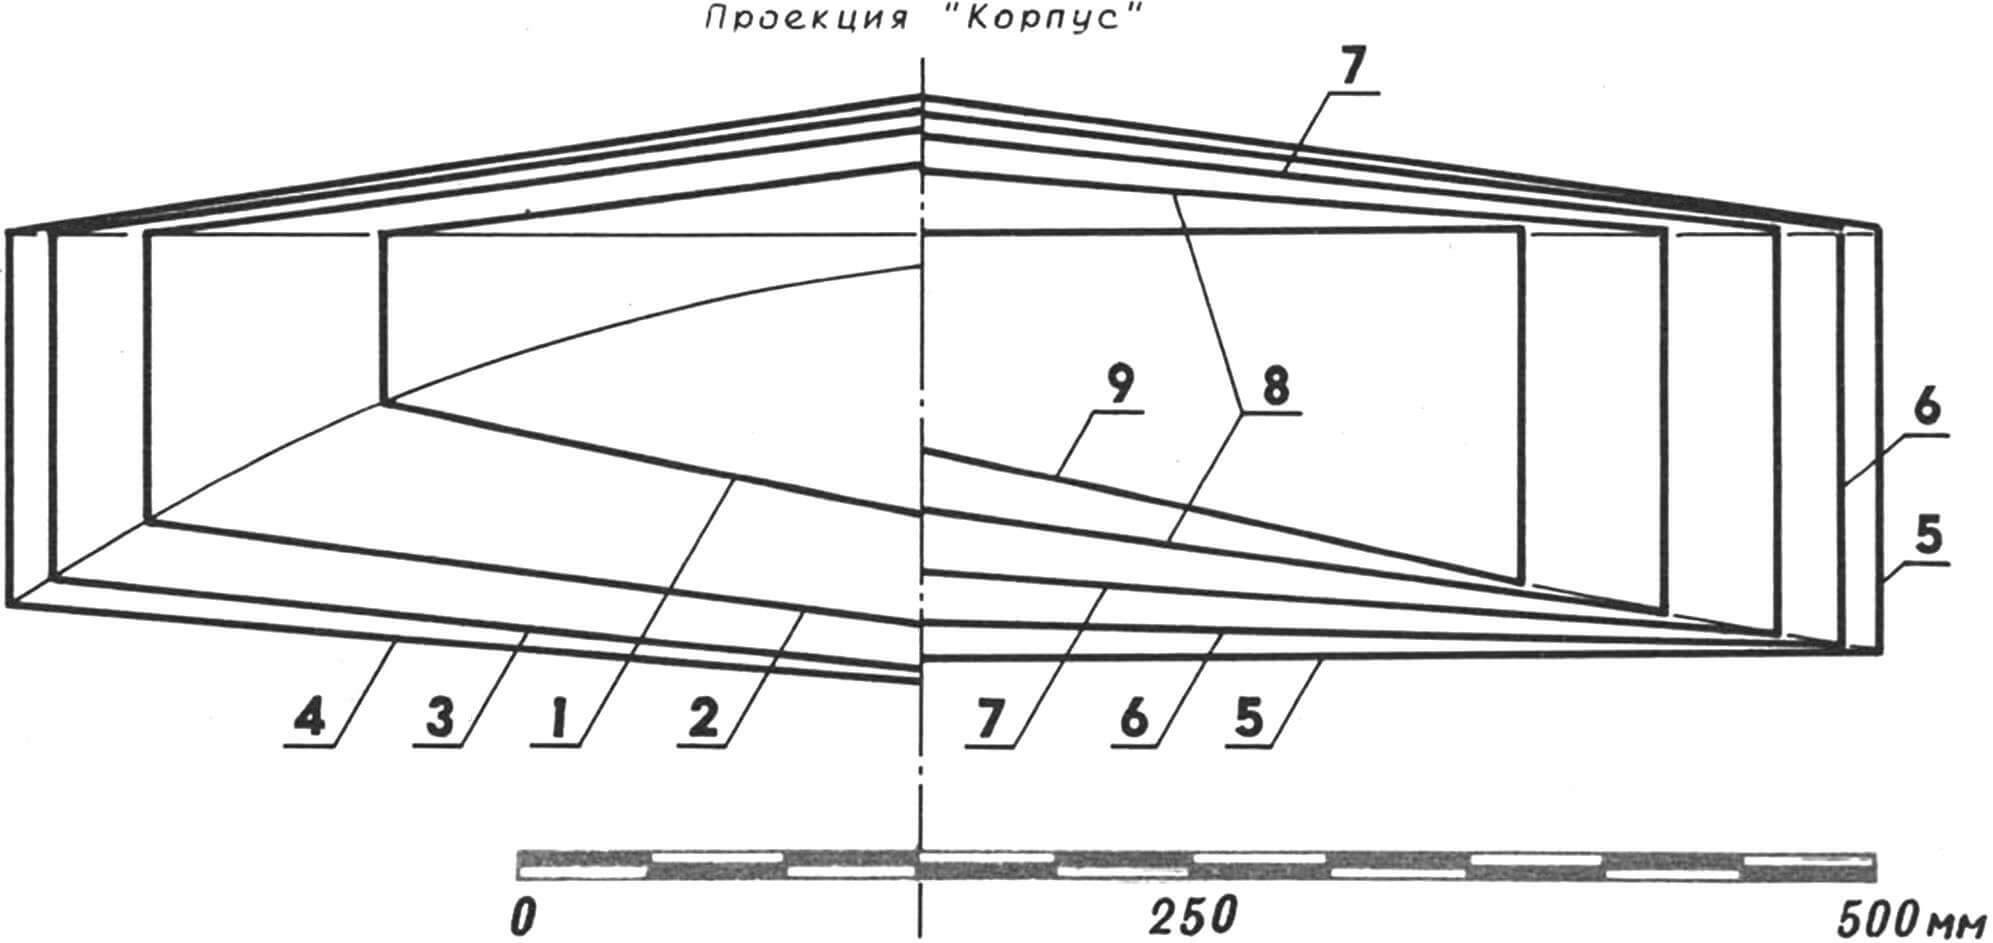 Рис. 3. Теоретический чертеж корпуса парусной доски.